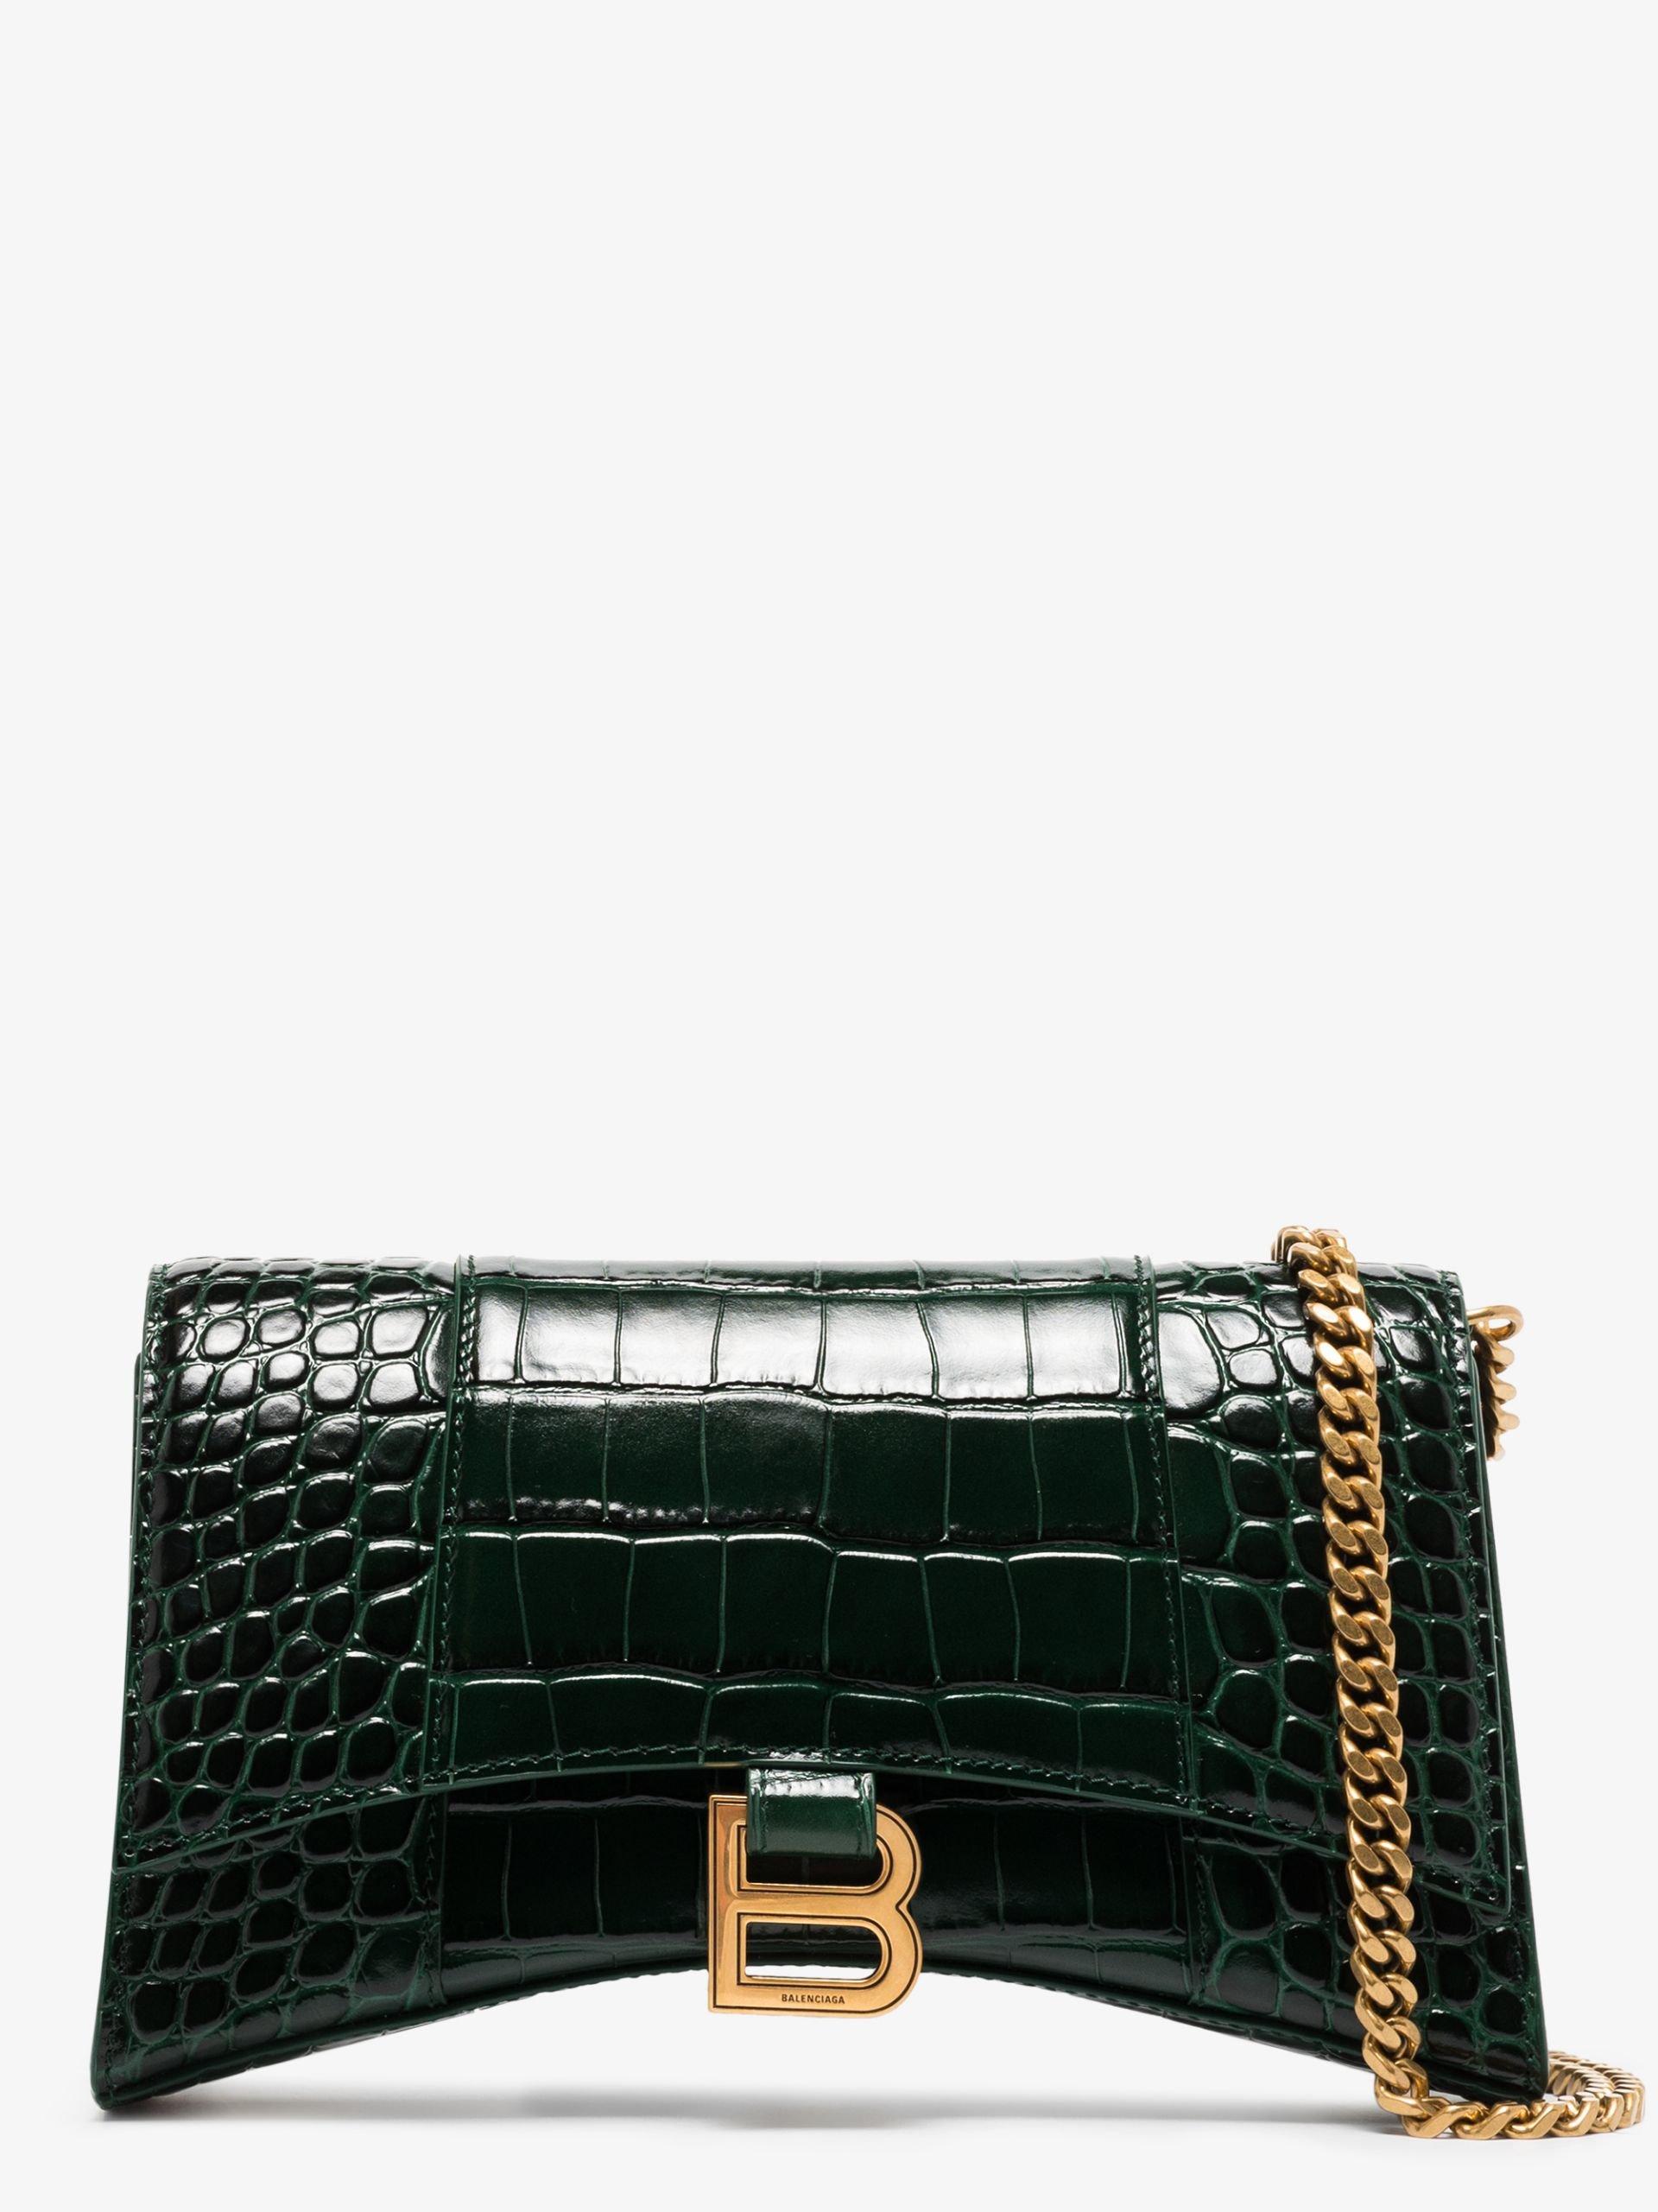 Green Hourglass crocodile-effect leather cross-body bag, Balenciaga